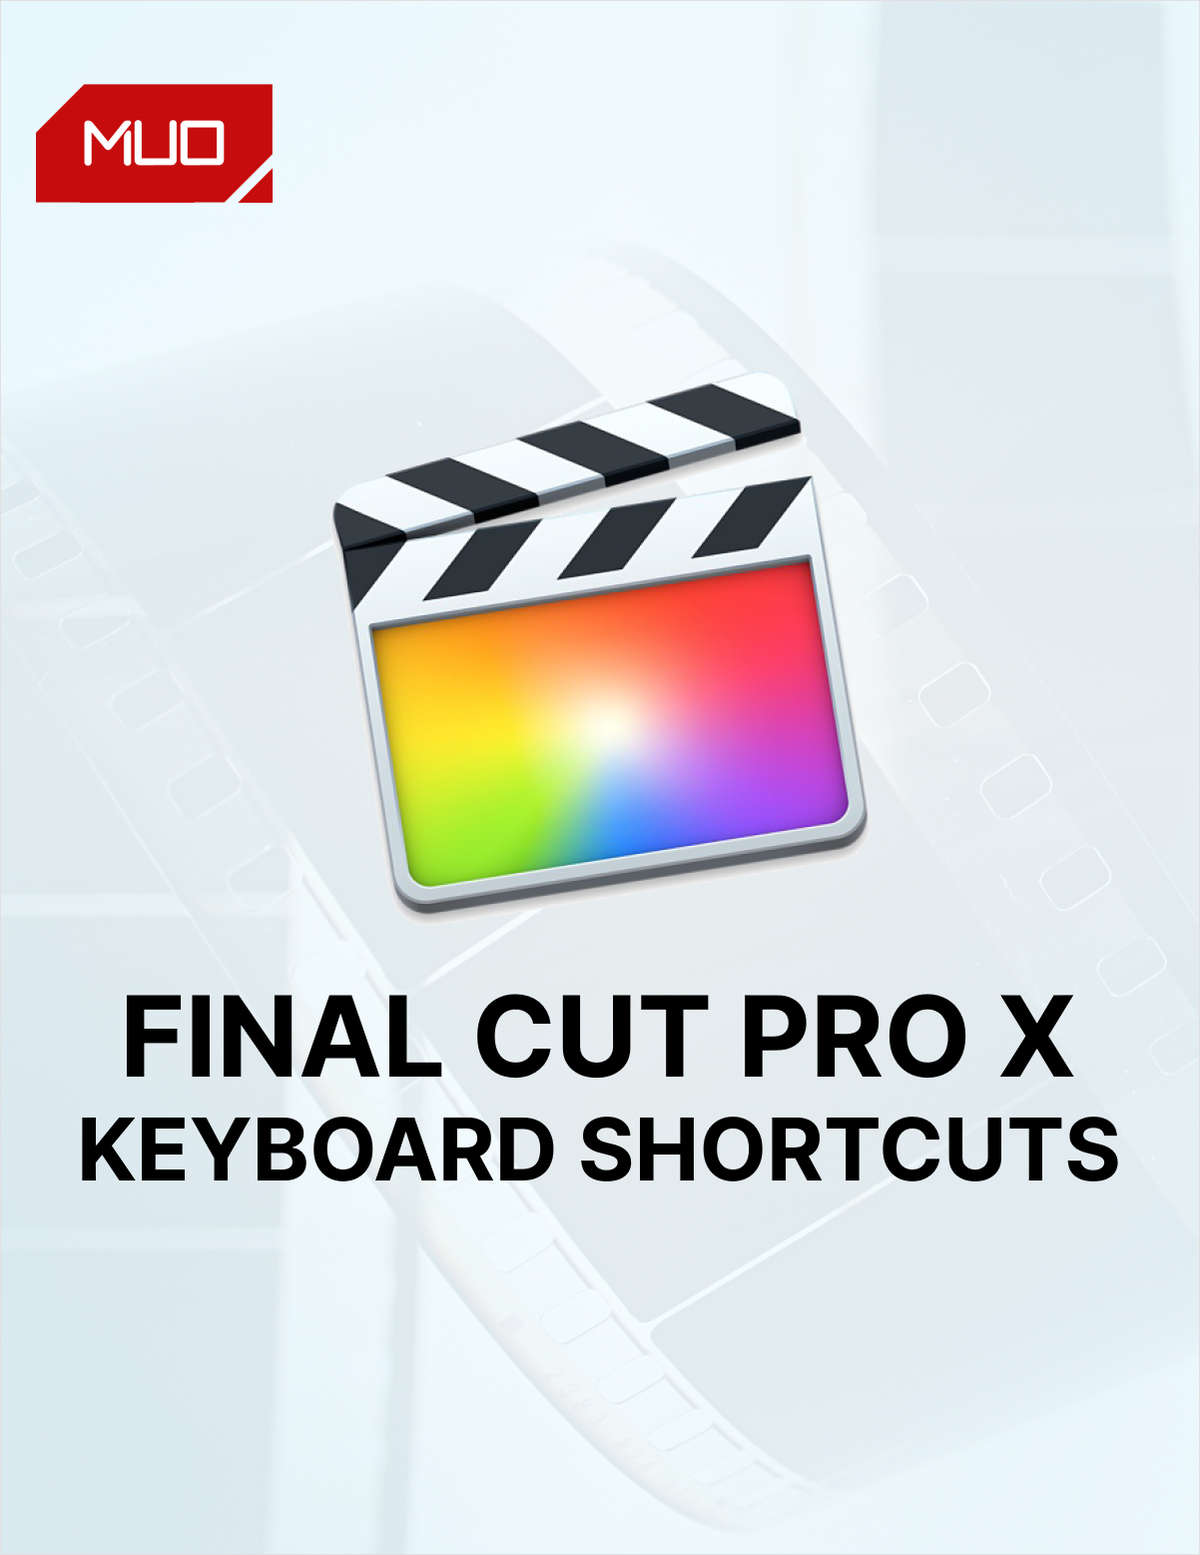 final cut pro x 10.4 keyboard shortcuts download